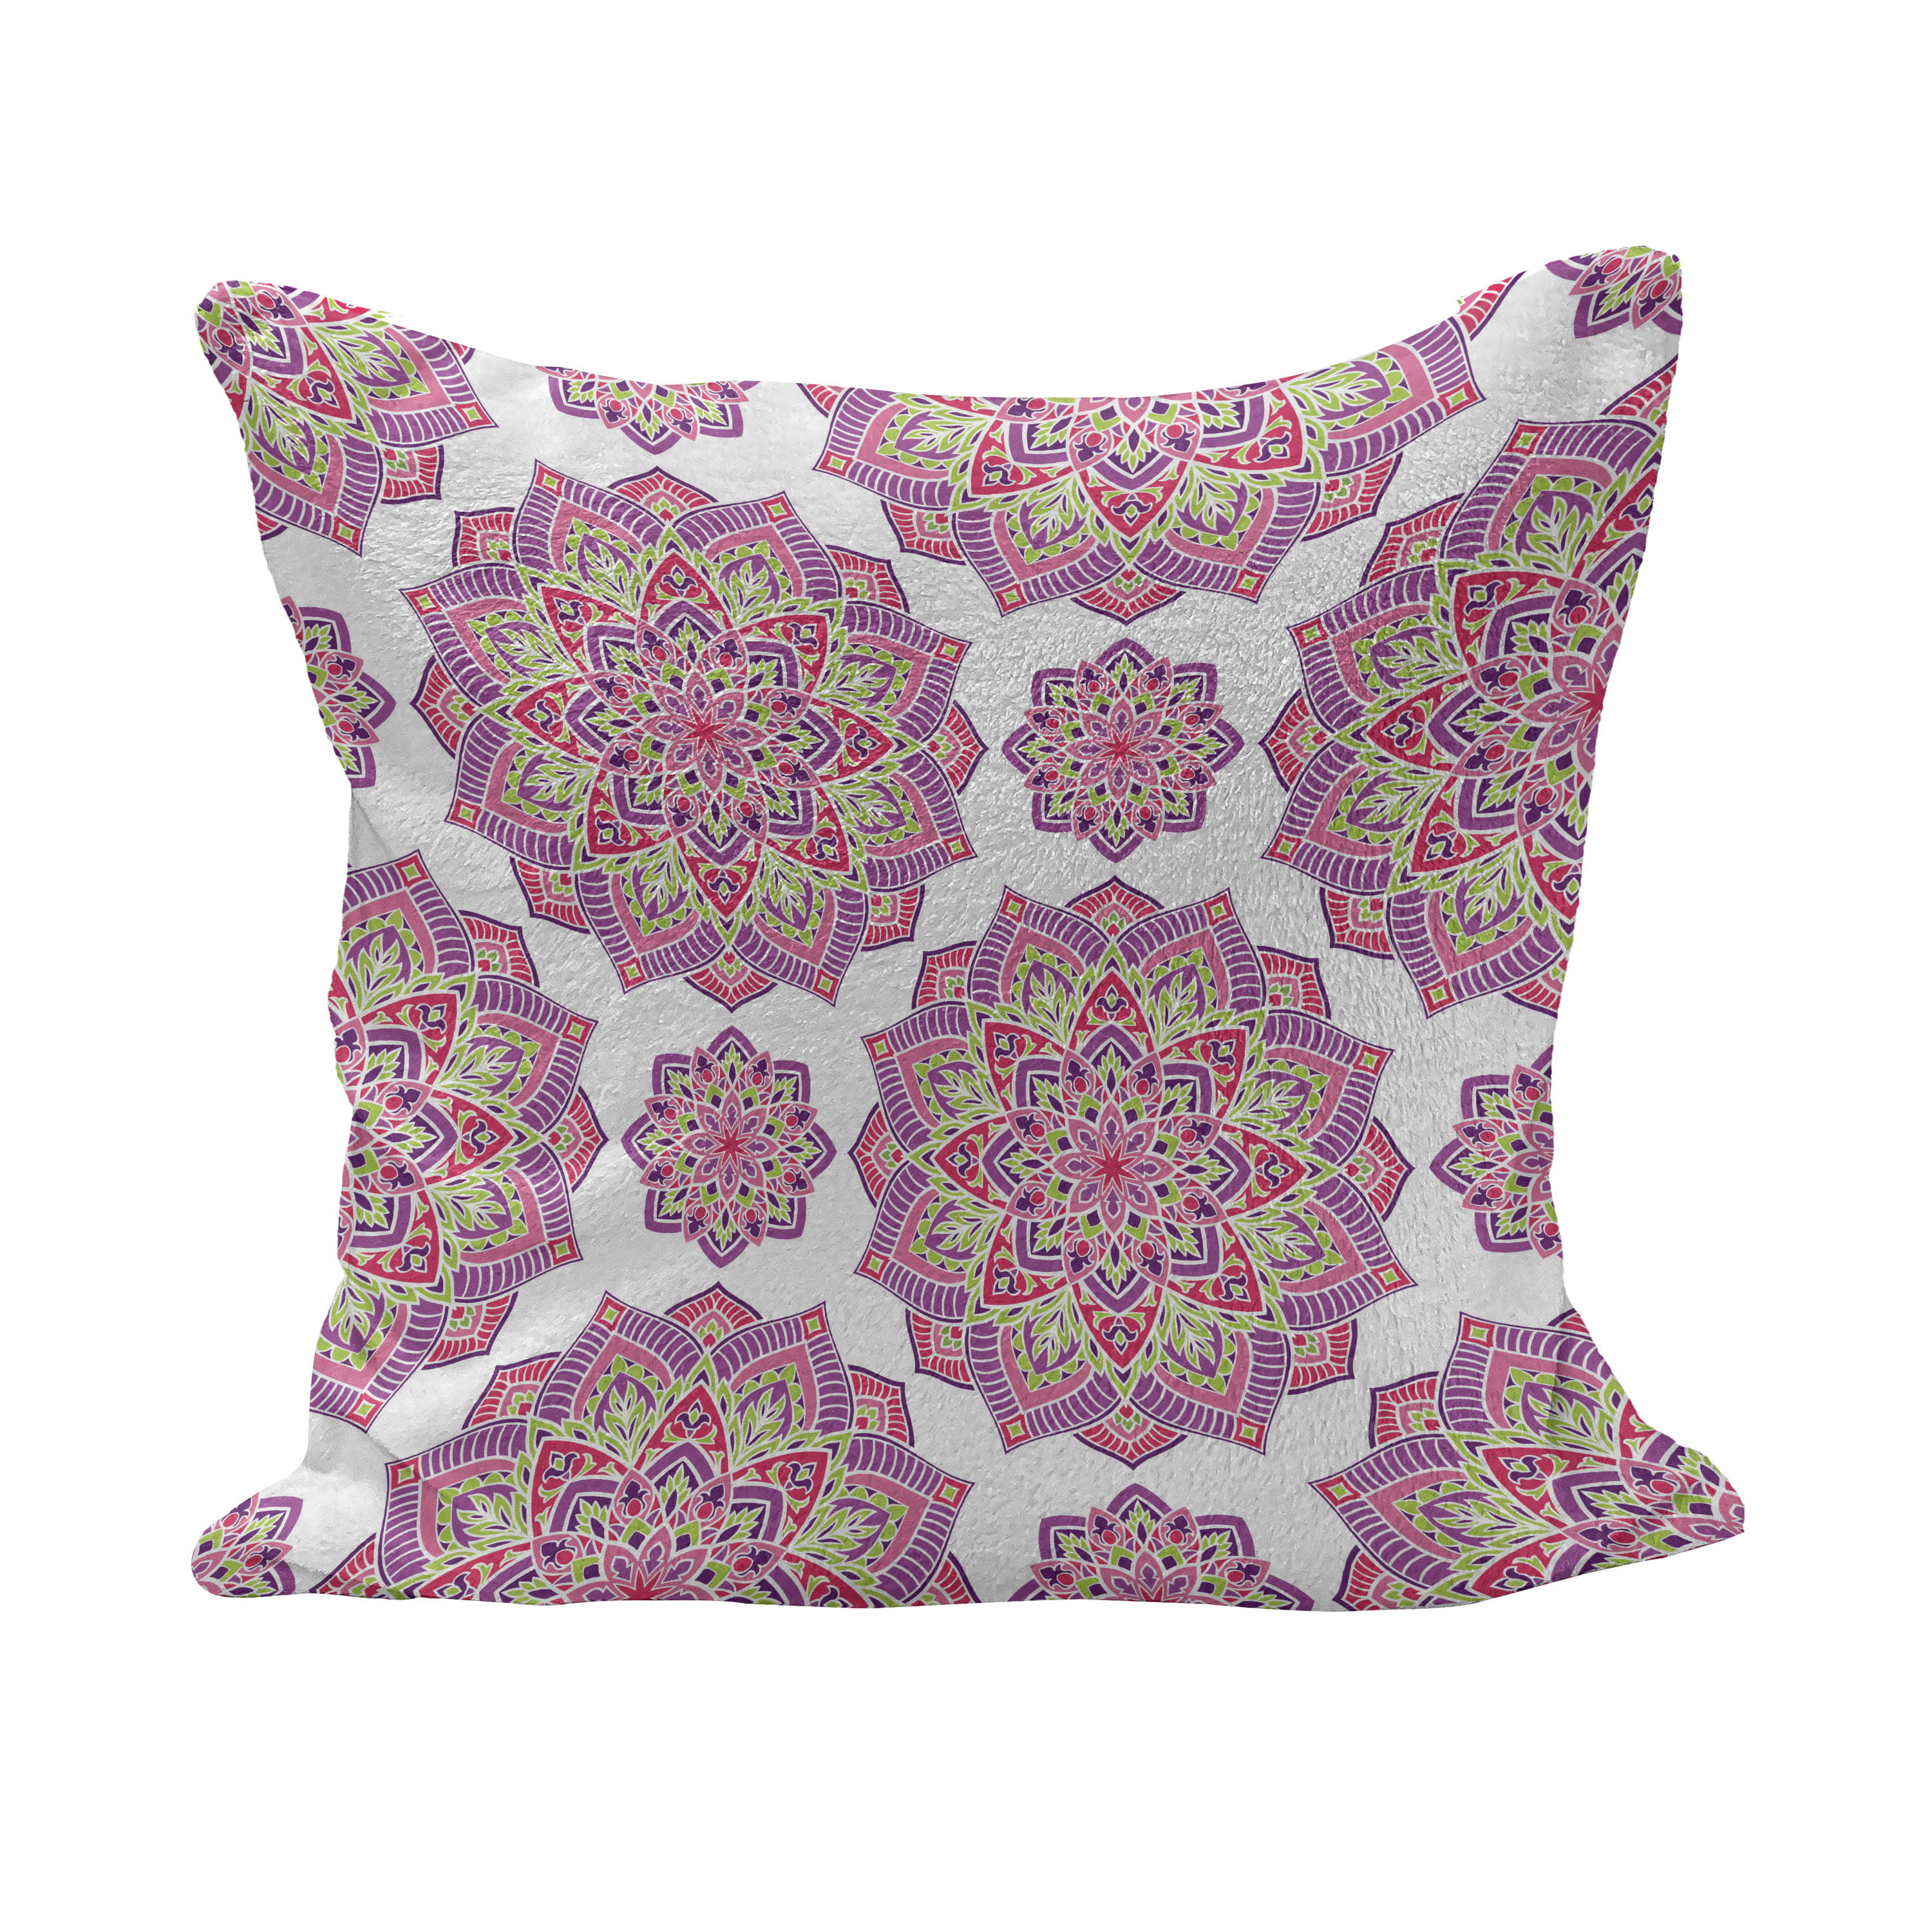 Mandala Decorative Pillow Covers Lotus Throw Cushion Case